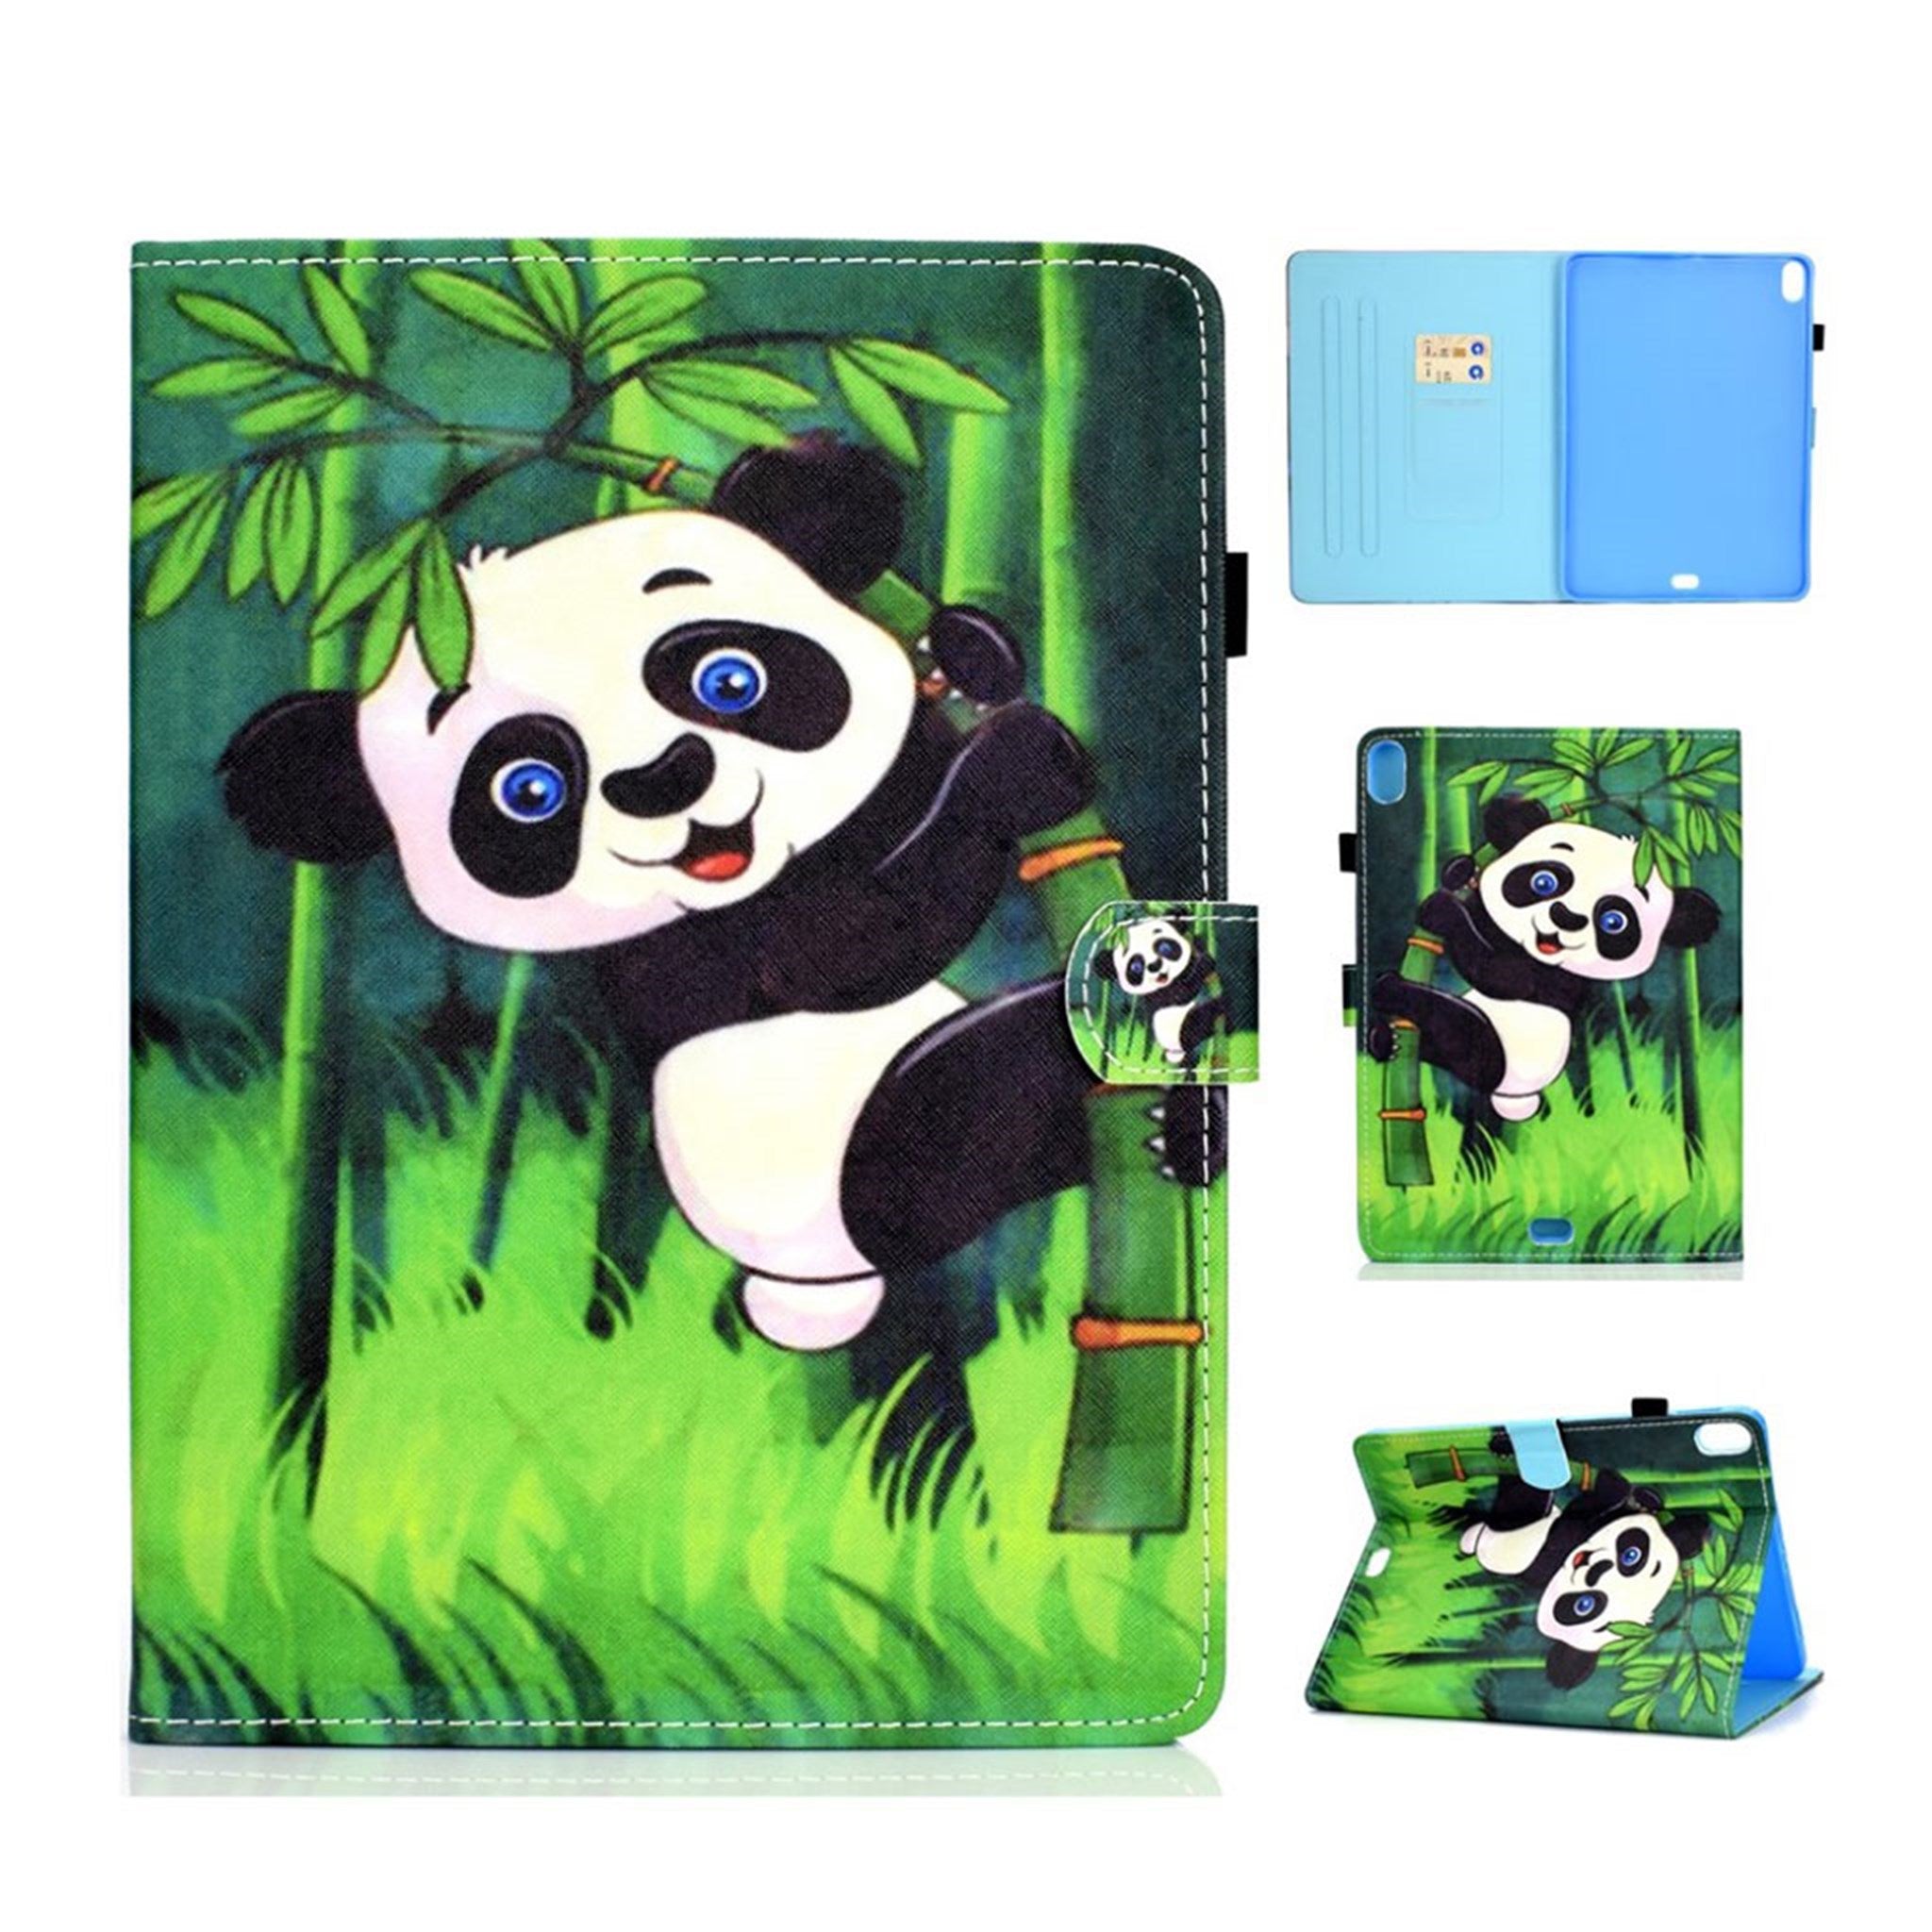 iPad Pro 11 inch (2018) patterned leather flip case - Panda